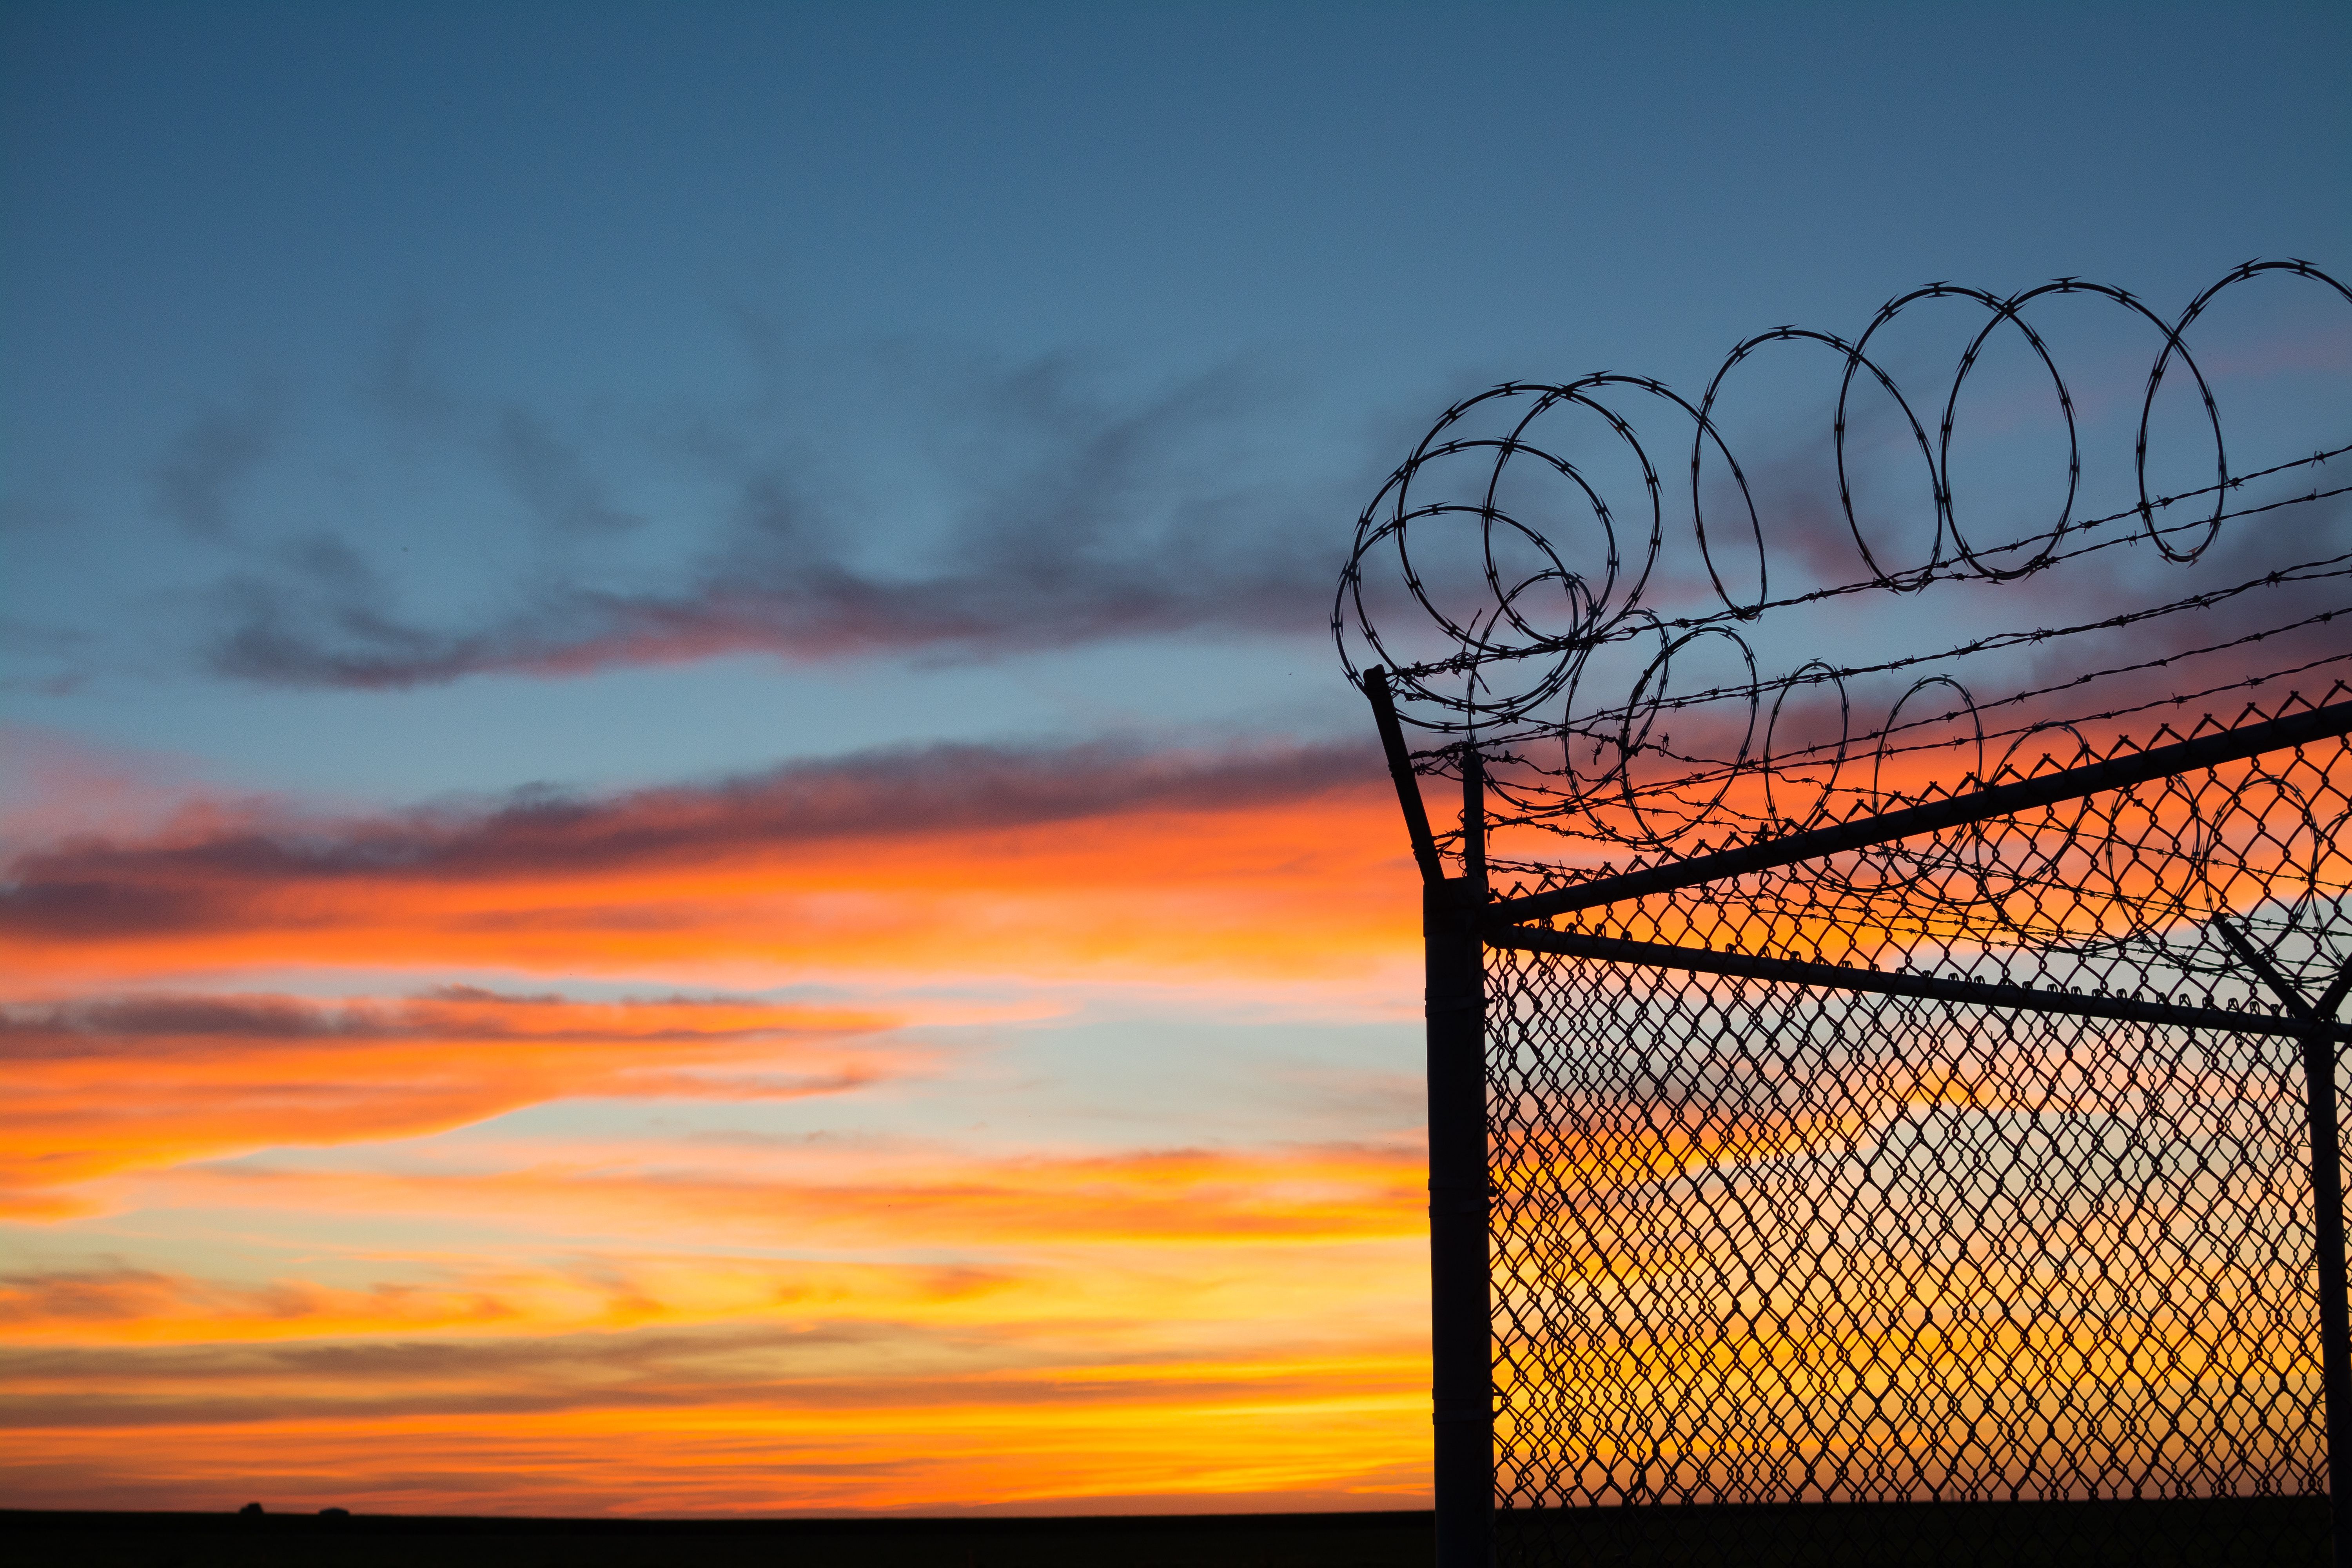 Barbed wire fence | Image credit: EJRodriquez - stock.adobe.com